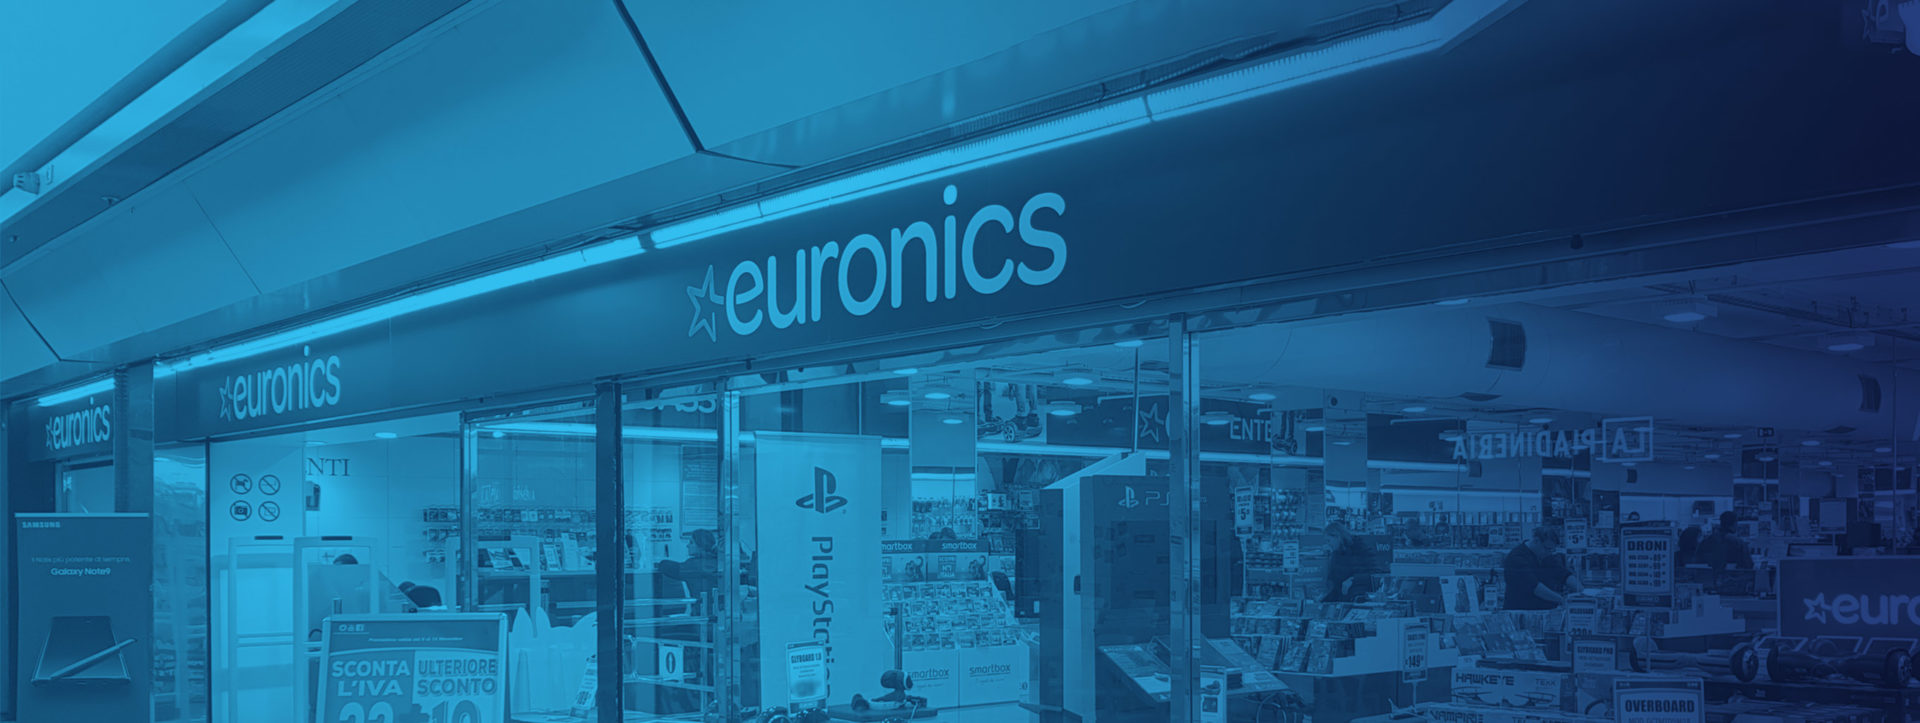 Euronics store